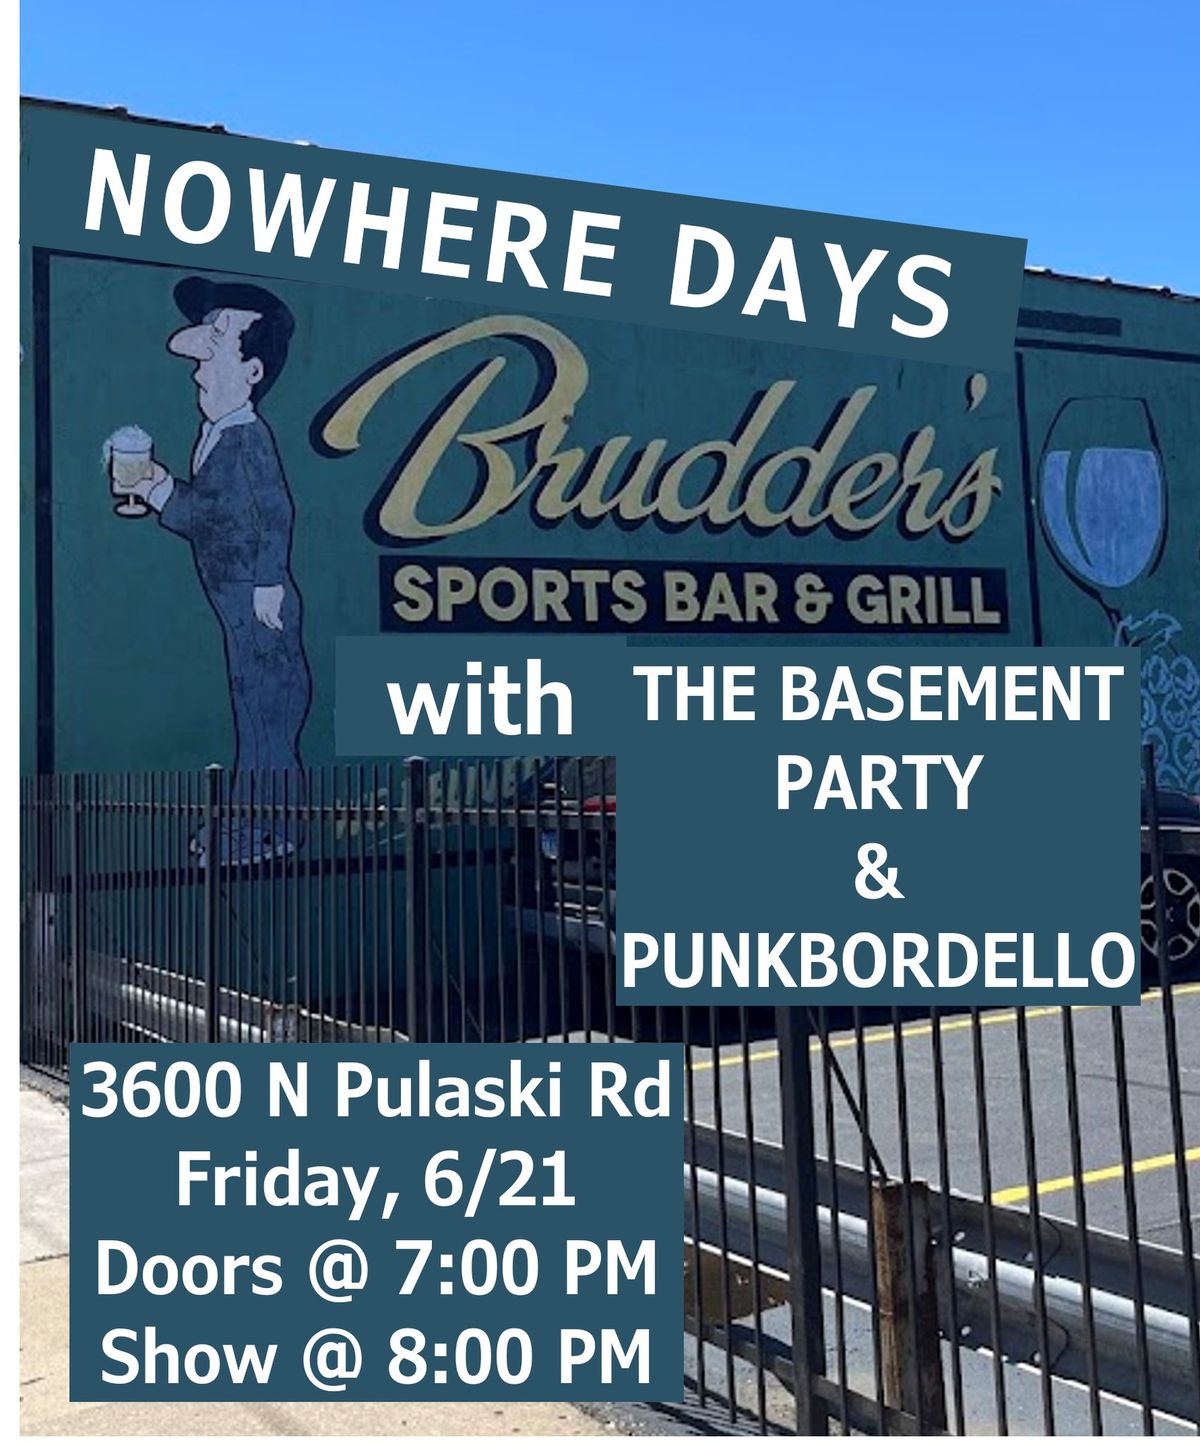 Nowhere Days @ Brudder's w\/The Basement Party, PunkBordello